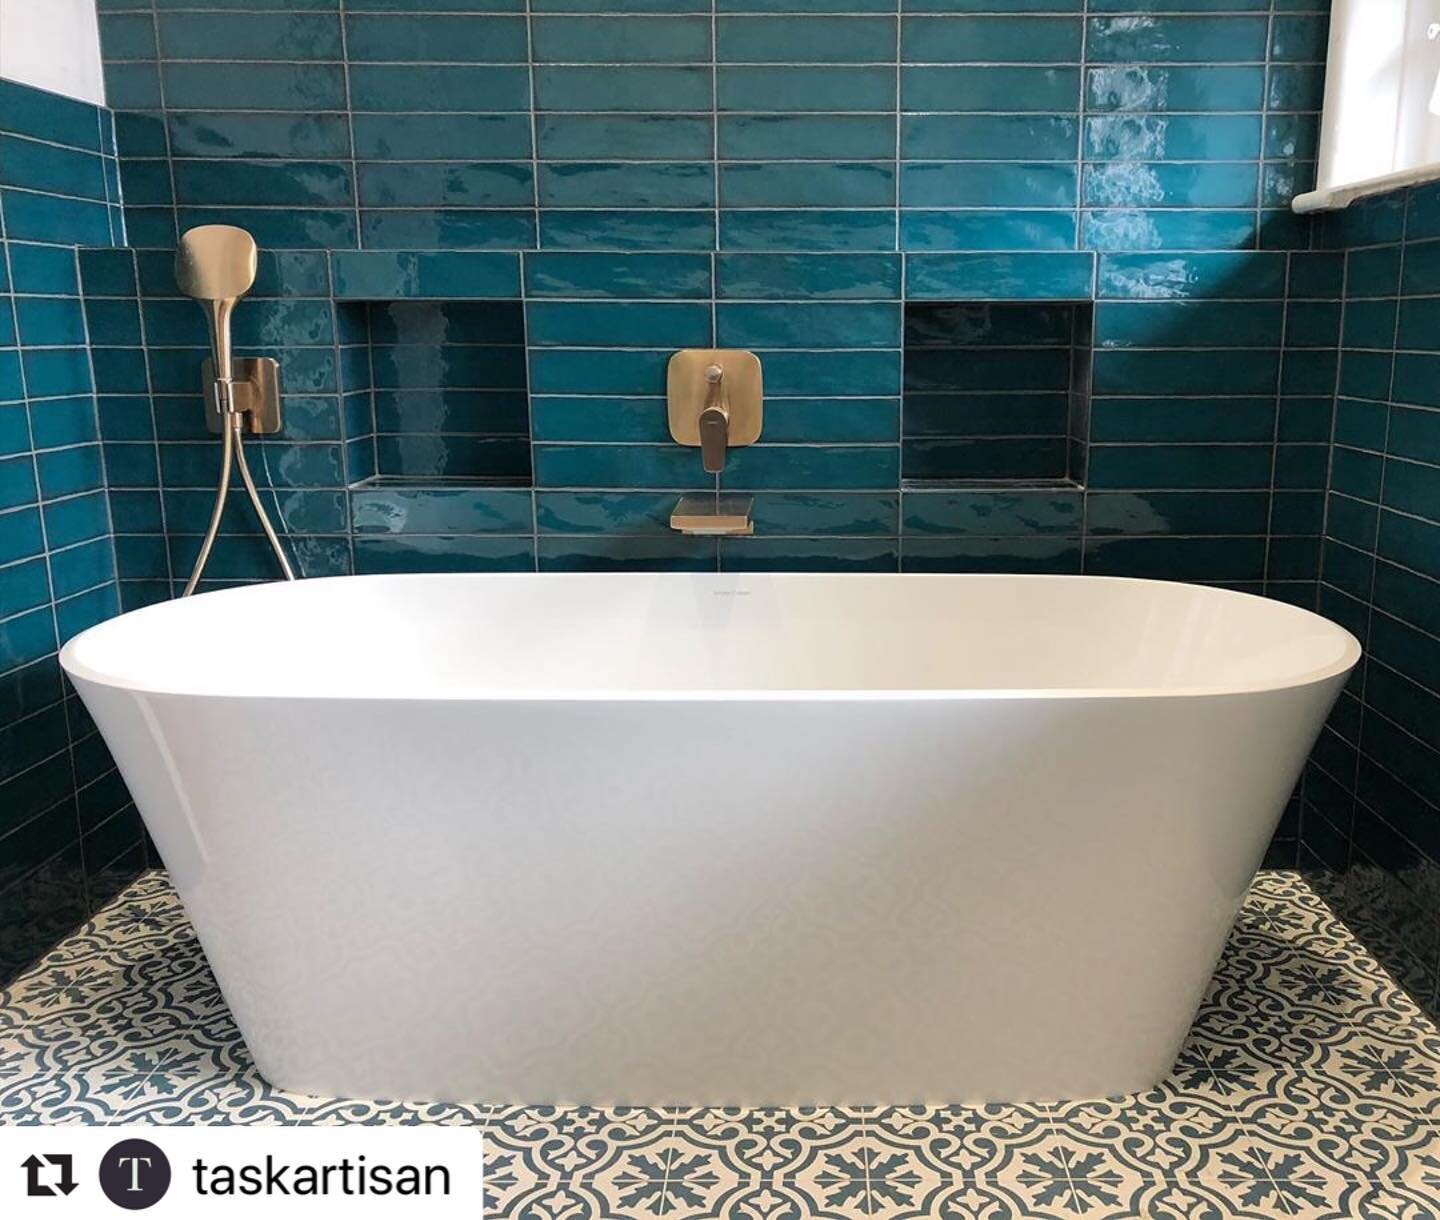 #Repost @taskartisan
great working with you!
.
.
.
.
.
#bathroomdesign #bathroom #bathroomdecor #bath #shower #tiling #tiles #tilingwork #craft #craftmanship #design #interiordesign #interior #architecture #interiorarchitecture #interi&oslash;r #livi